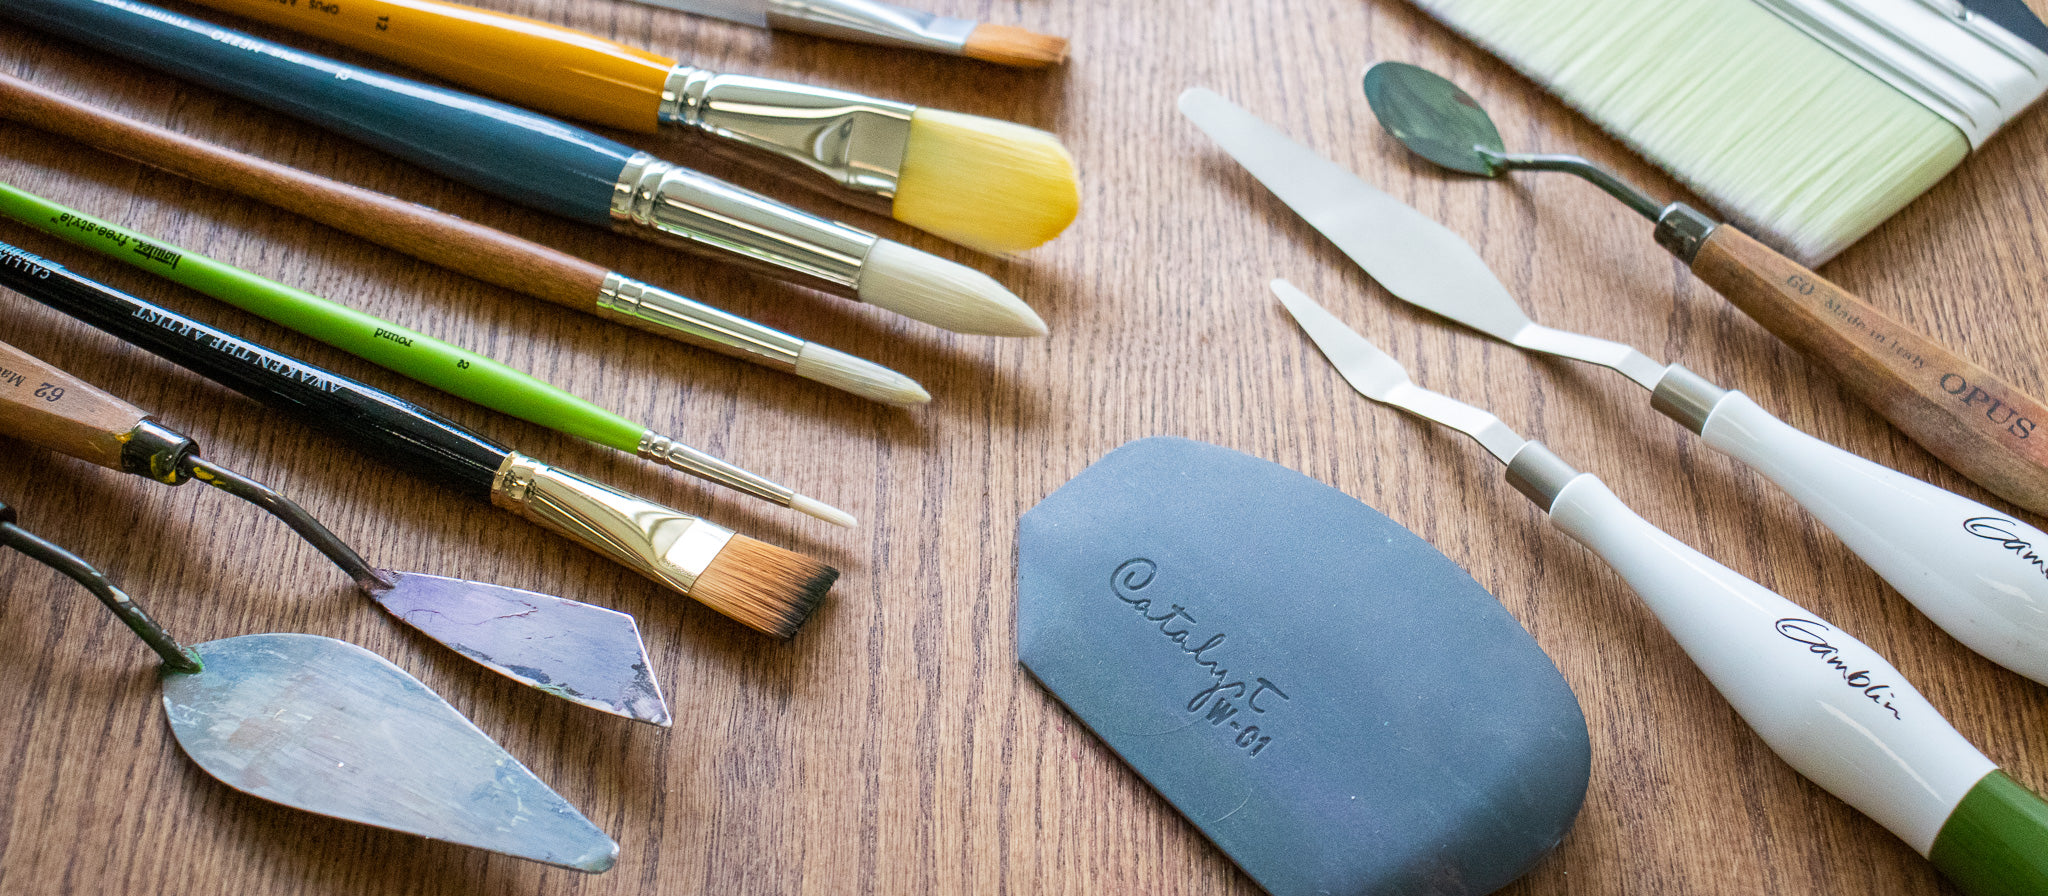 Creative Hobbies 1 7/8 Hake Blender Brush for Watercolor, Wash, Ceramic & Pottery Painting